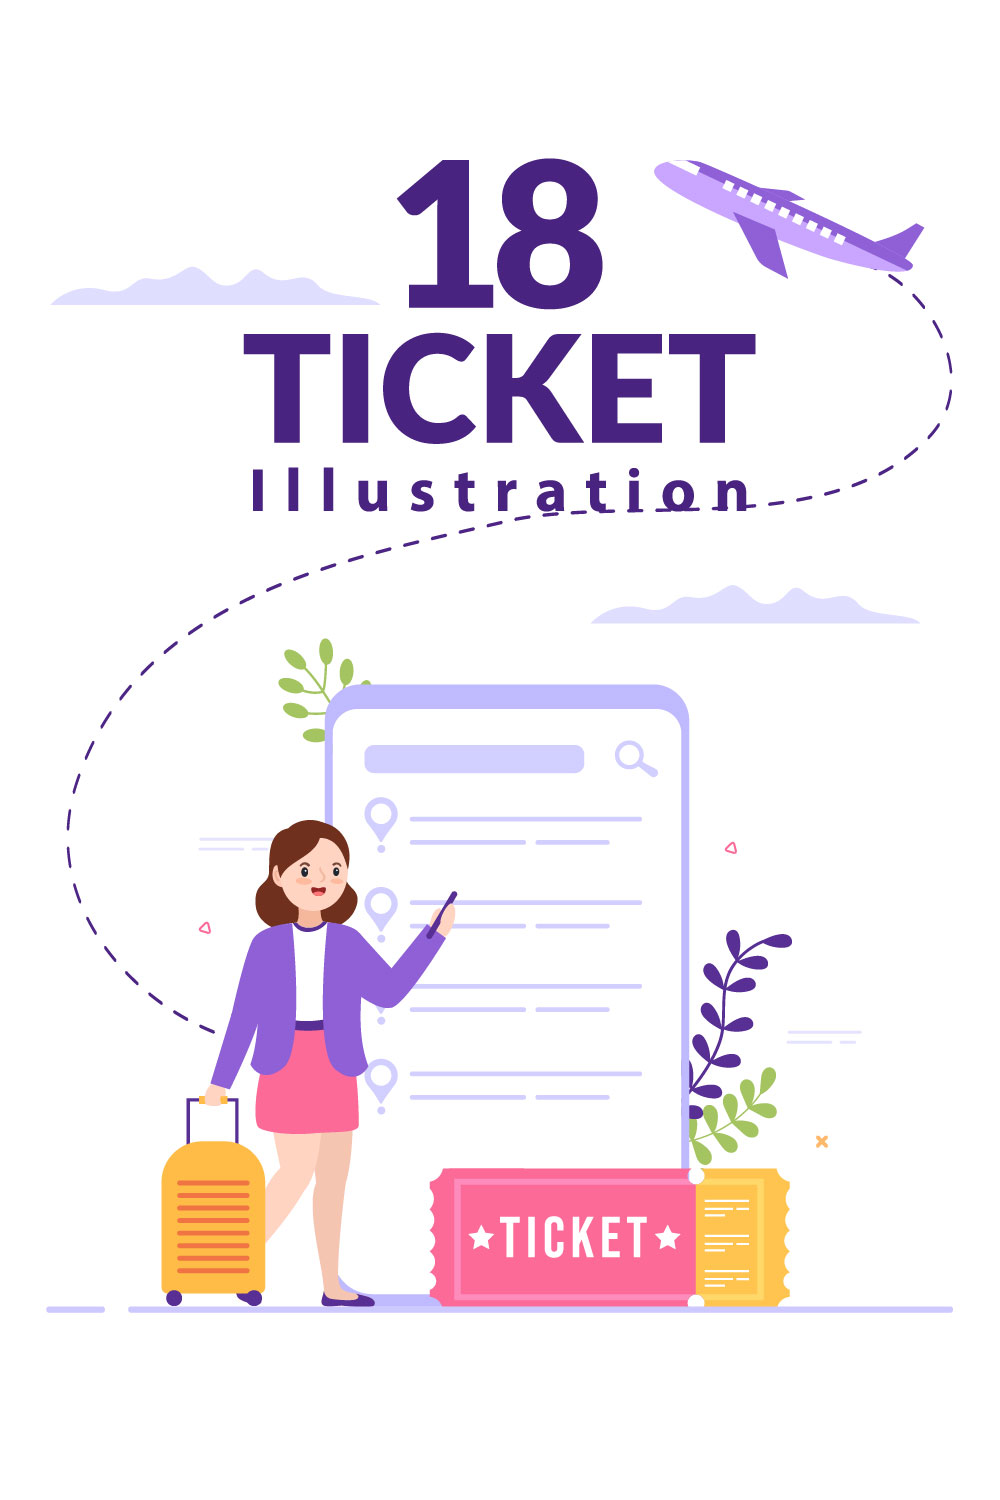 Travel Online Booking Service Illustration Pinterest image.